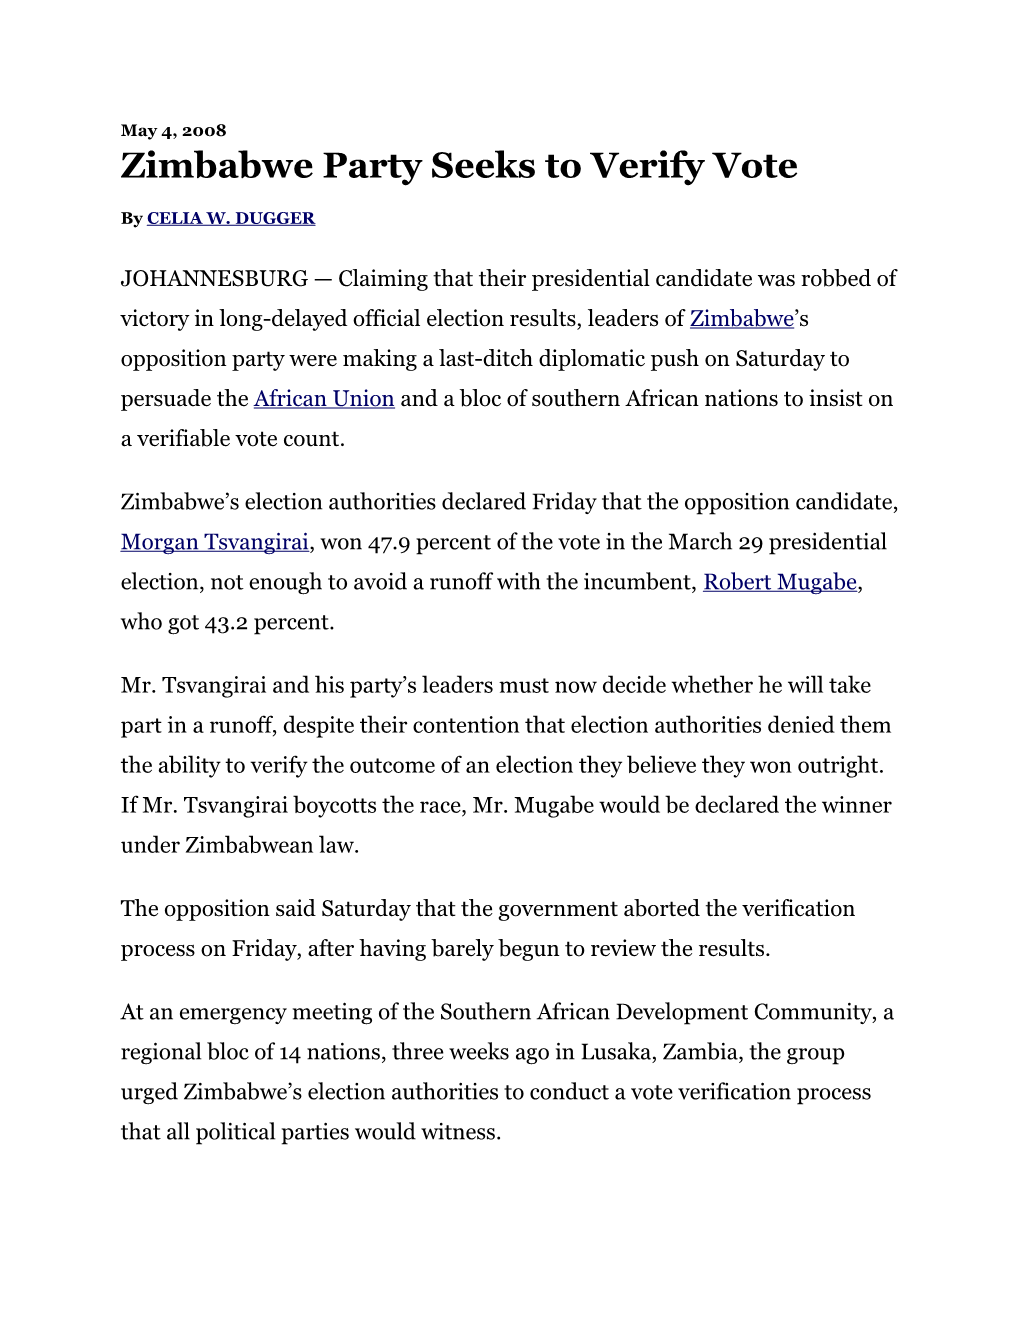 Zimbabwe Party Seeks to Verify Vote